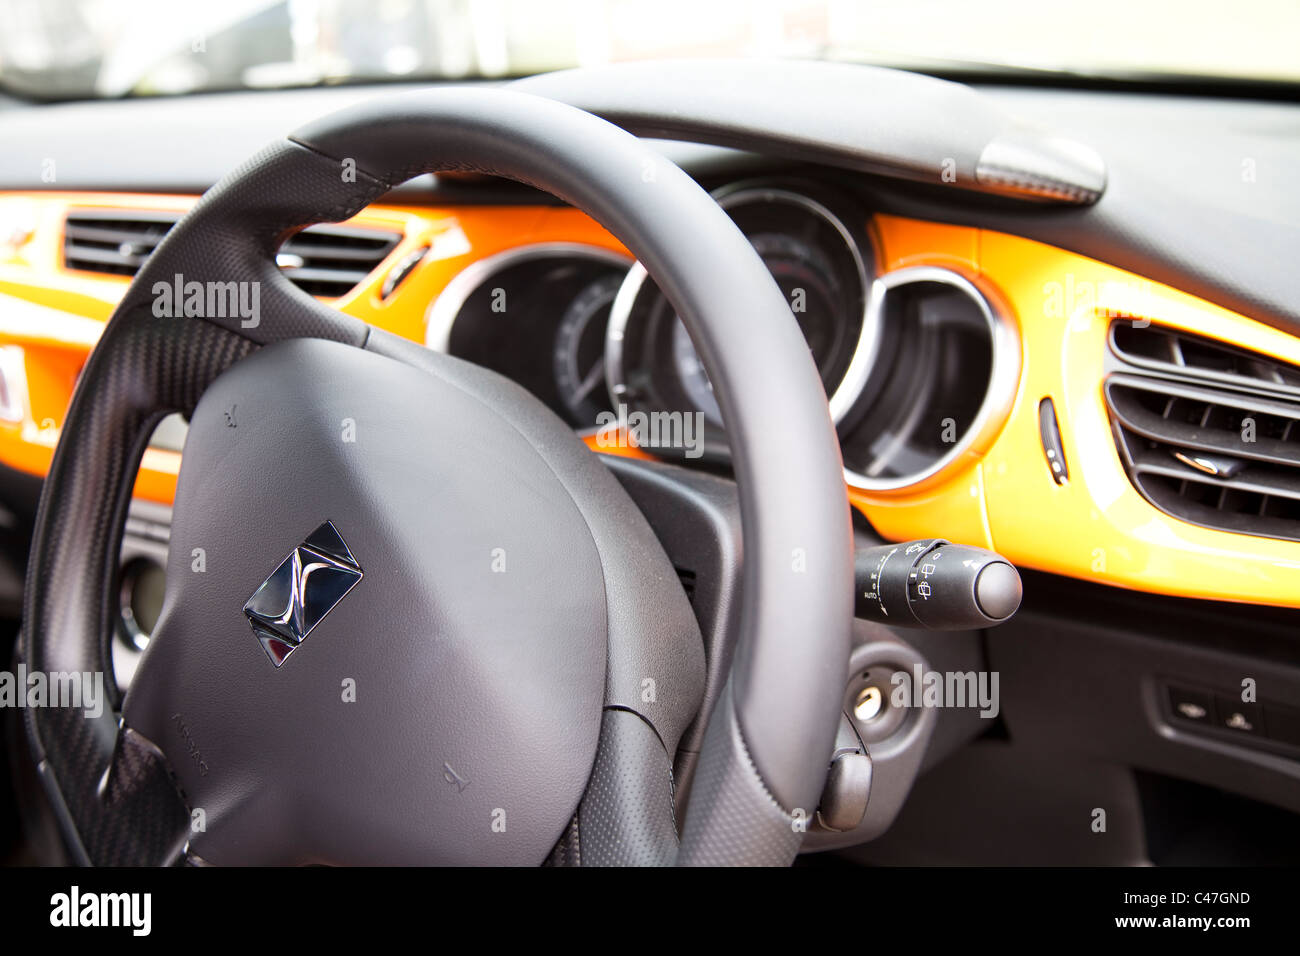 https://c8.alamy.com/comp/C47GND/citroen-ds3-car-modern-loud-orange-interior-steering-wheel-england-C47GND.jpg